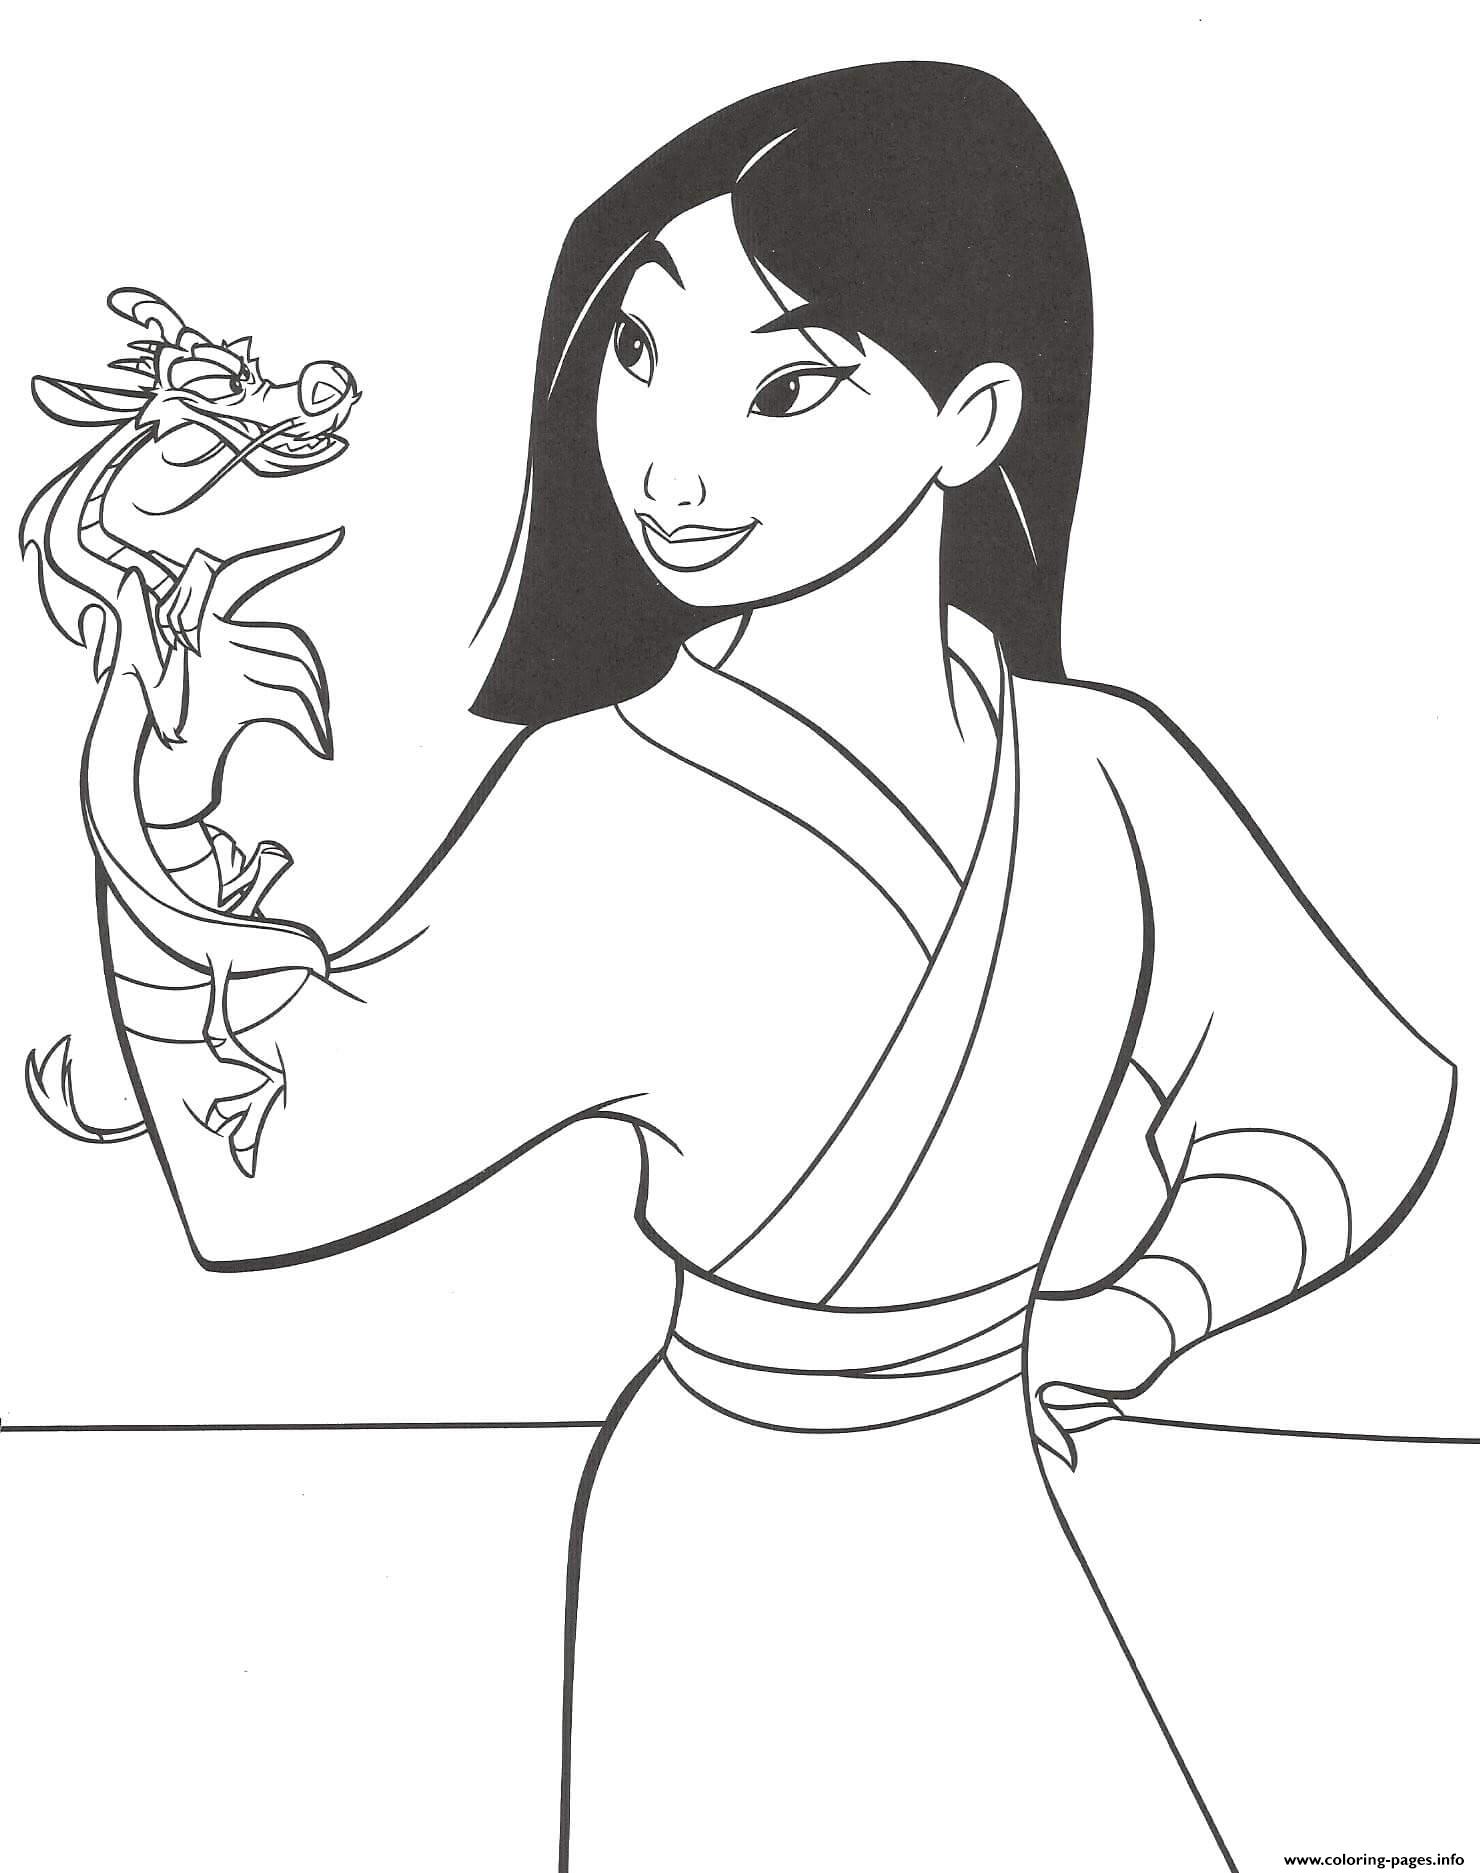 Mulan And Mushu Having Fun coloring